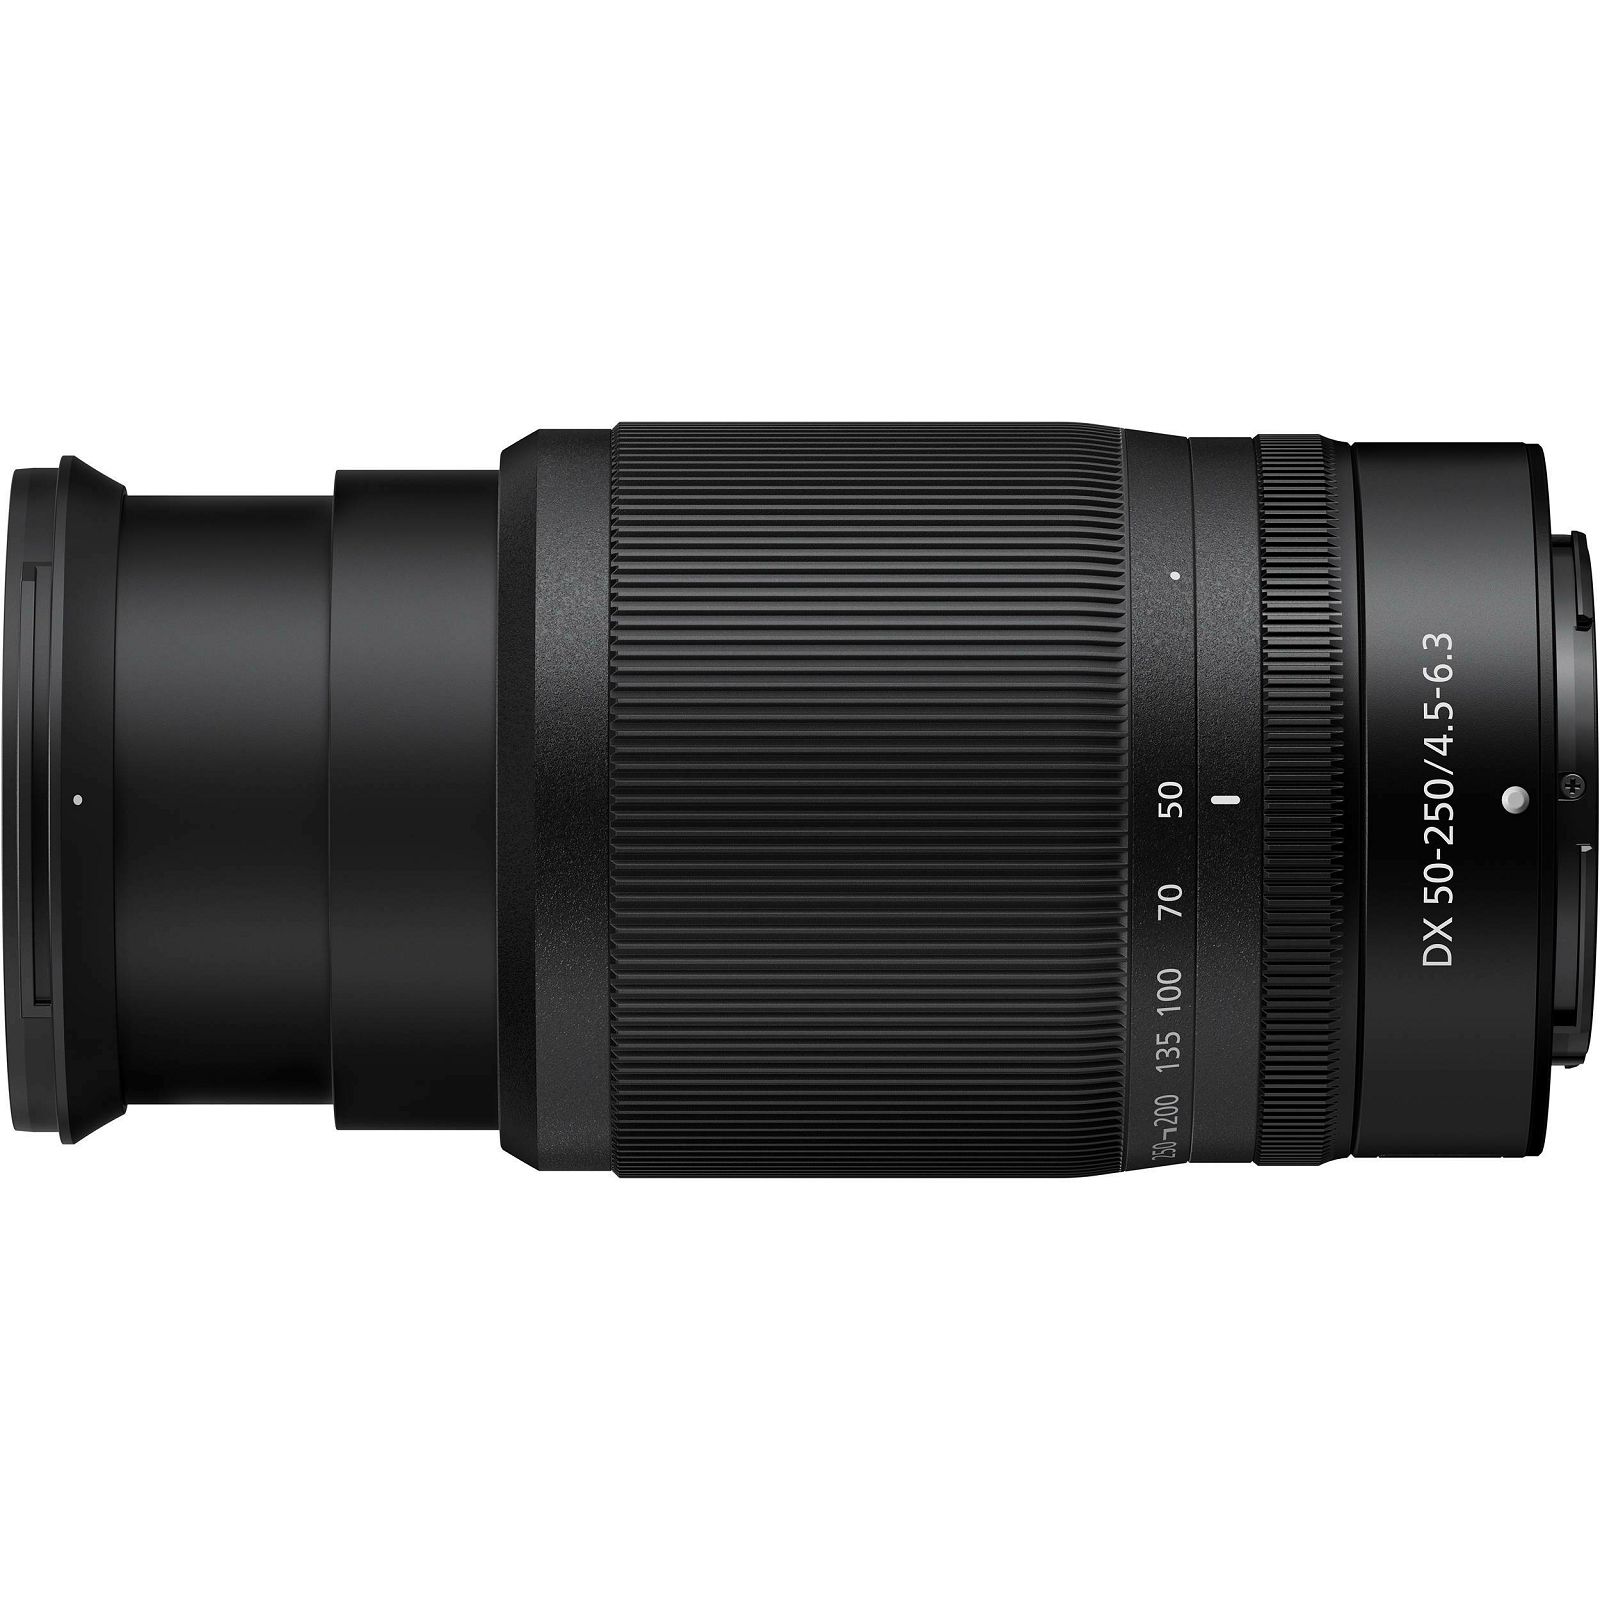 Nikon Z 50-250mm f/4.5-6.3 DX Nikkor telefoto objektiv (JMA707DA)